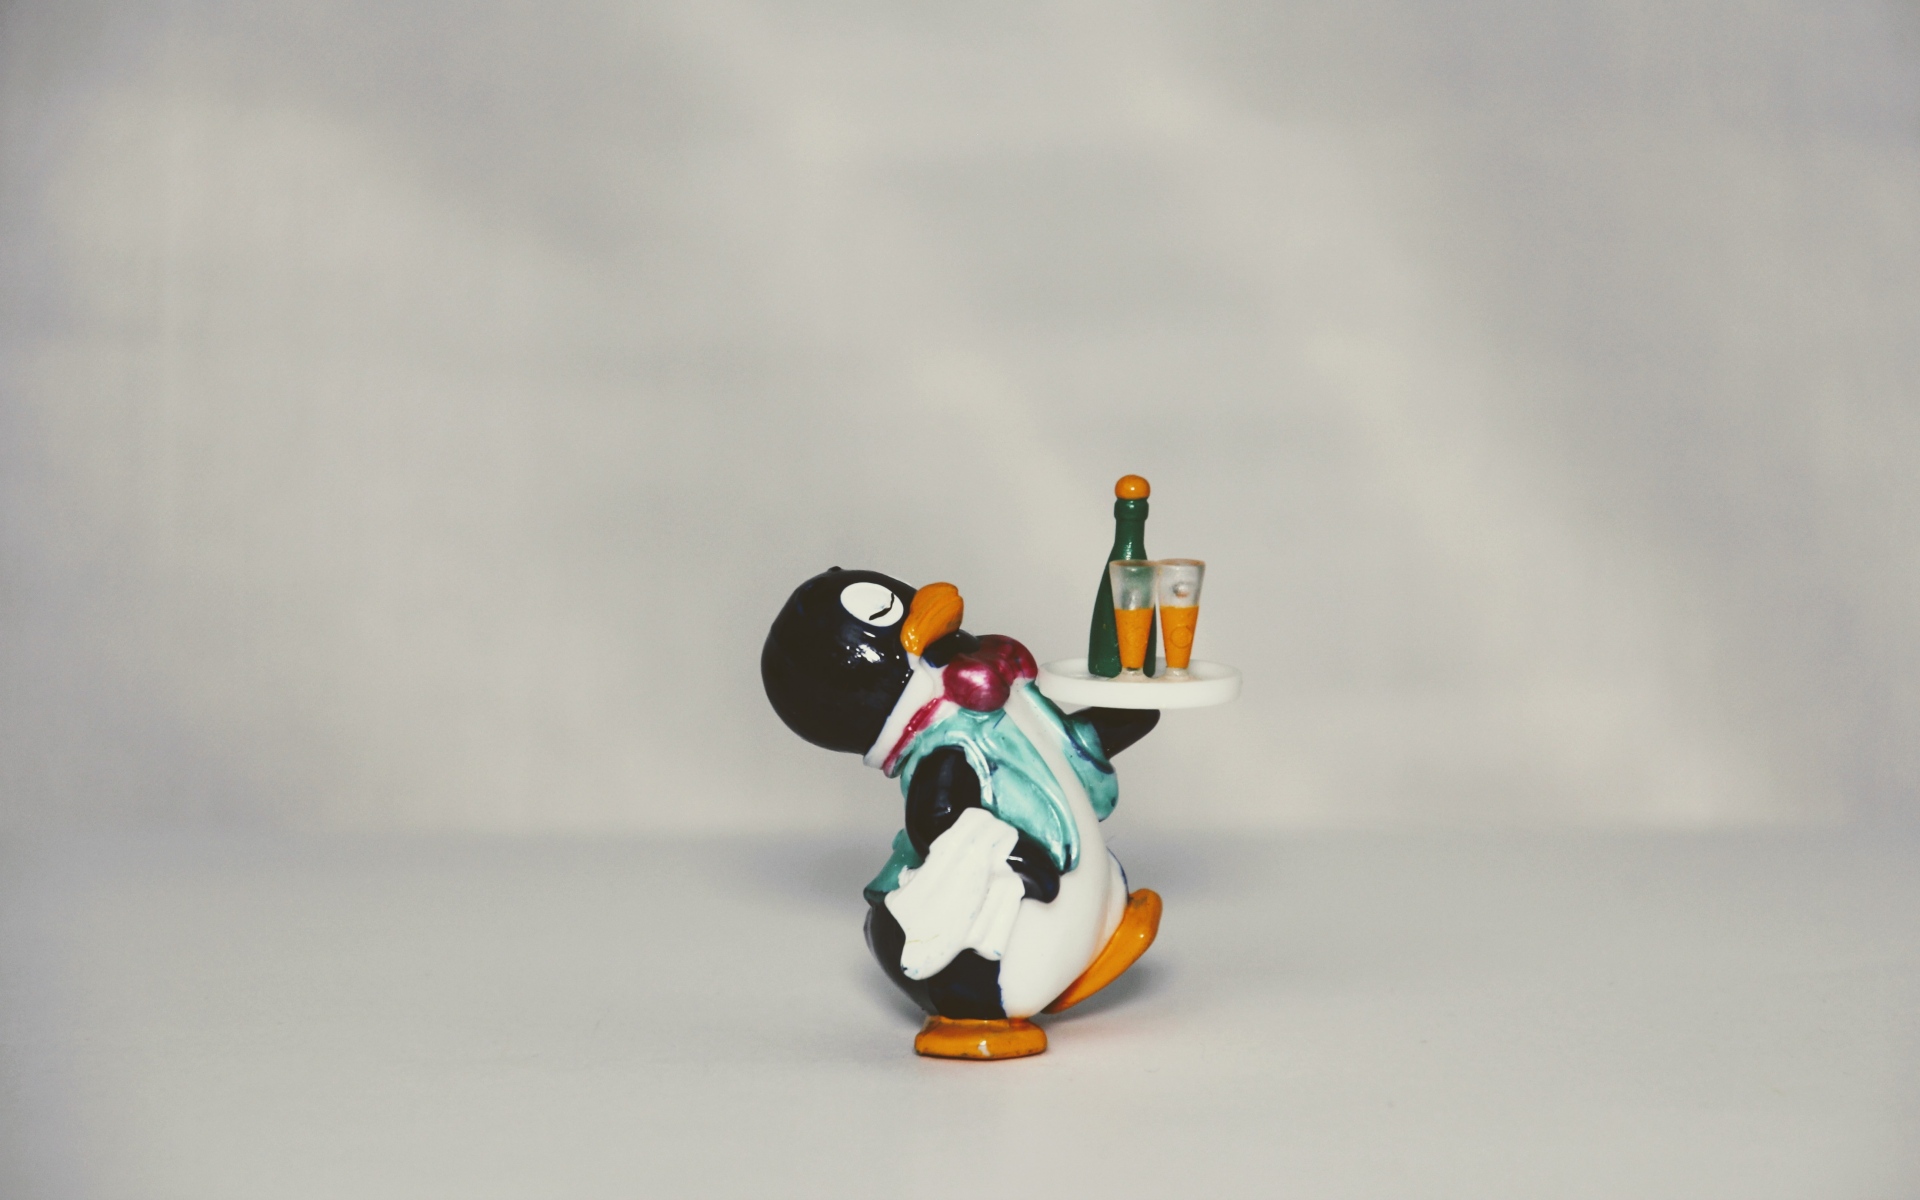 Картинки Пингвин, игрушка, официант, коллекция фото и обои на рабочий стол